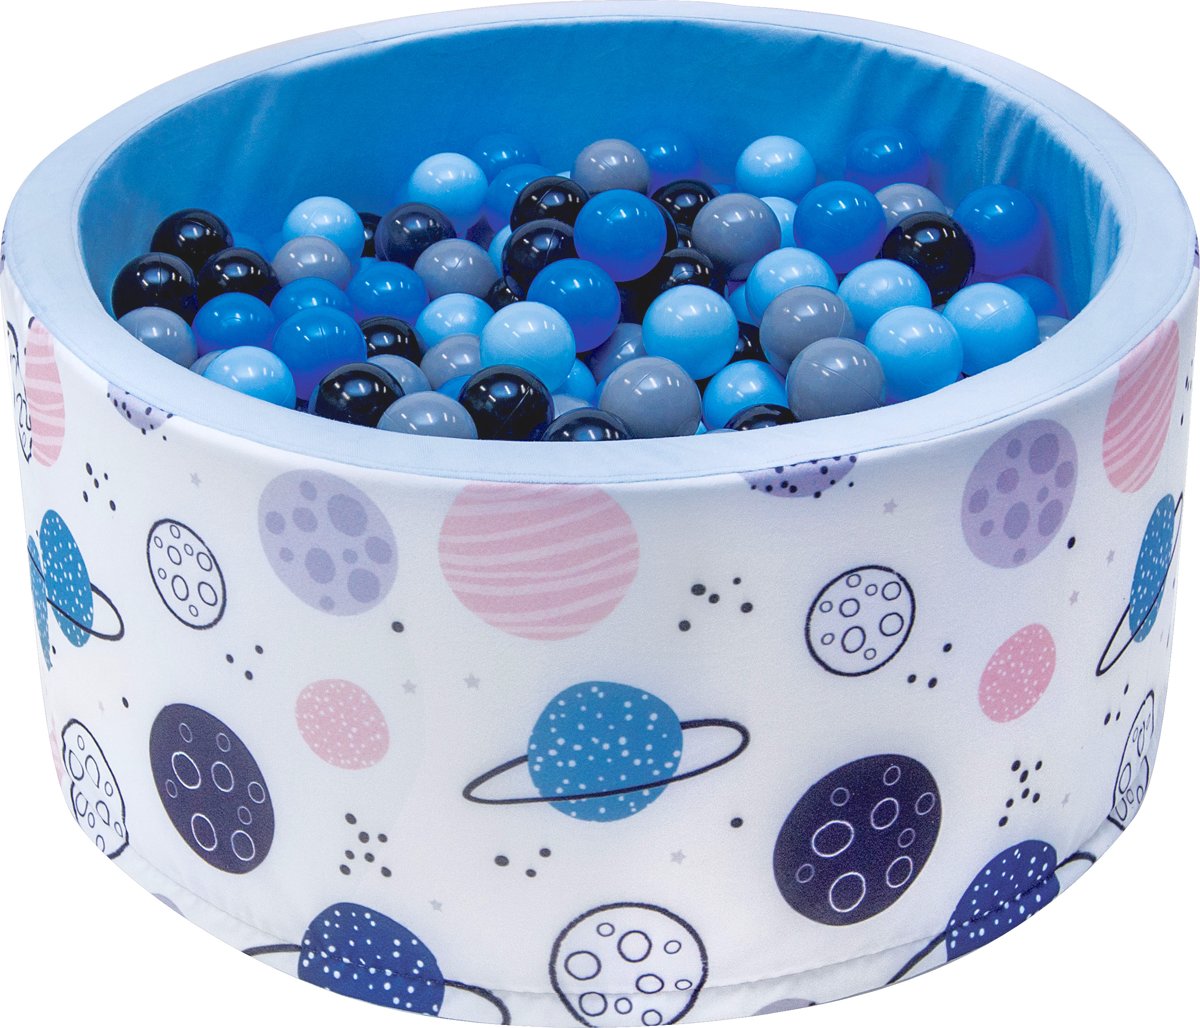 Ballenbak - stevige ballenbad -90 x 40 cm - 200 ballen Ø 7 cm - donkerblauw, grijs, zwart en lichtblauw